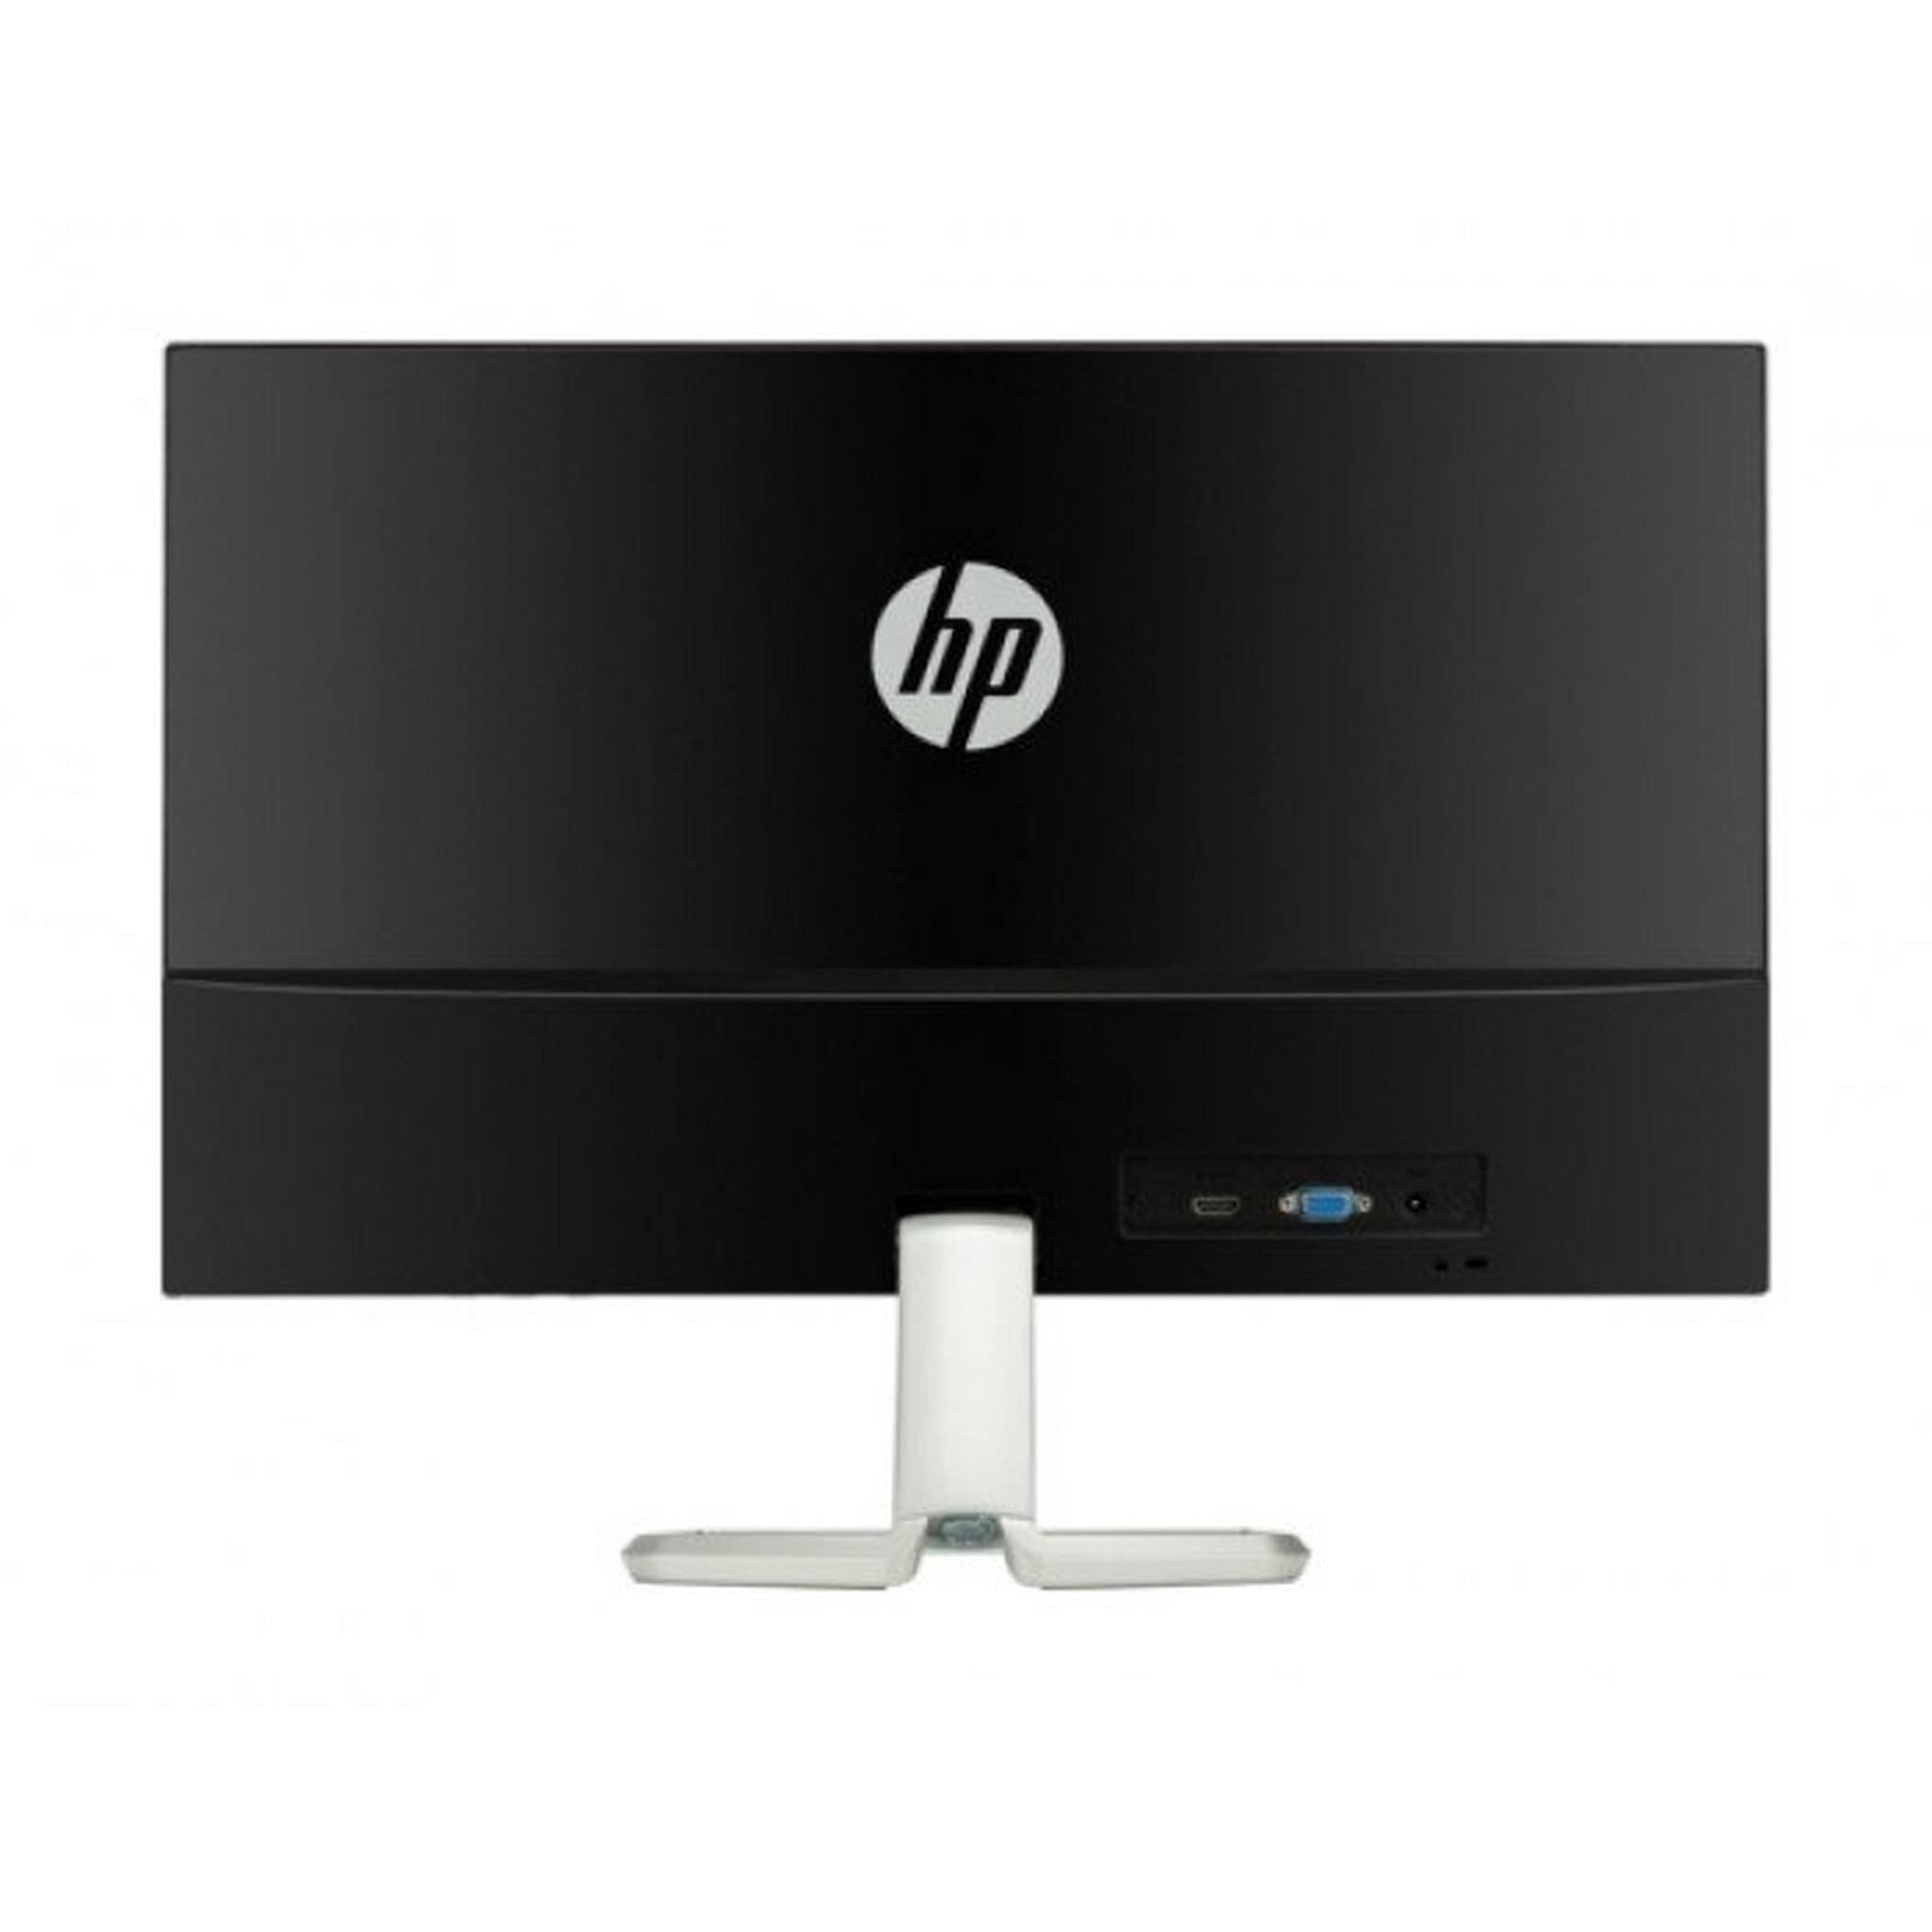 HP 24-inch Full HD LED Monitor - Silver (2XN60AA)